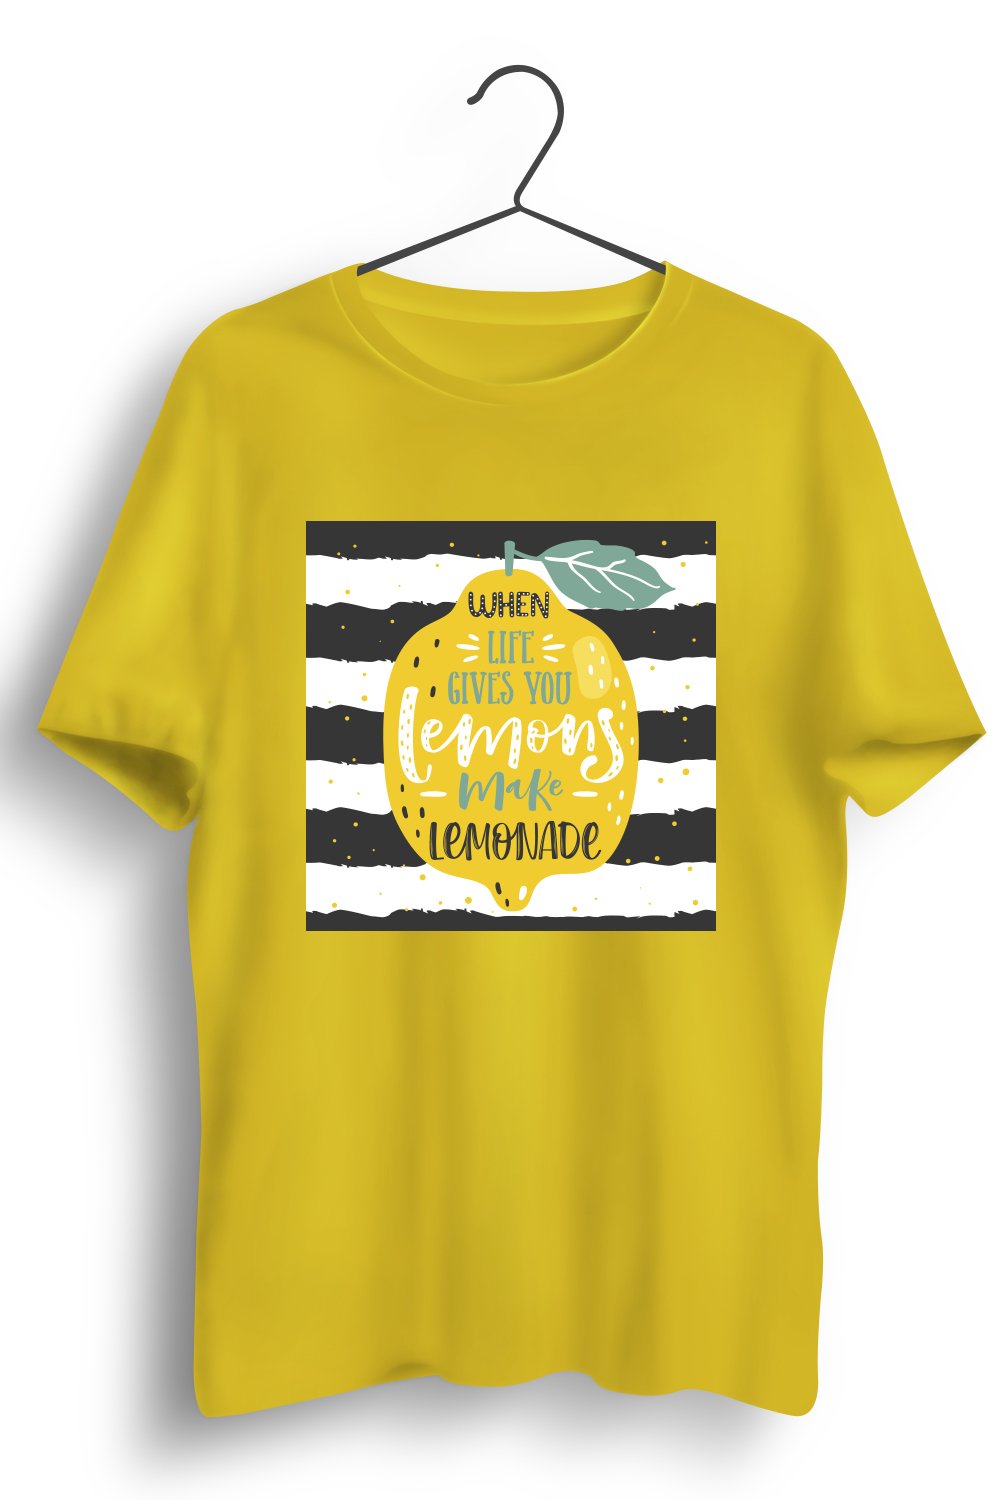 When Life Gives You Lemon Graphic Printed Yellow Tshirt